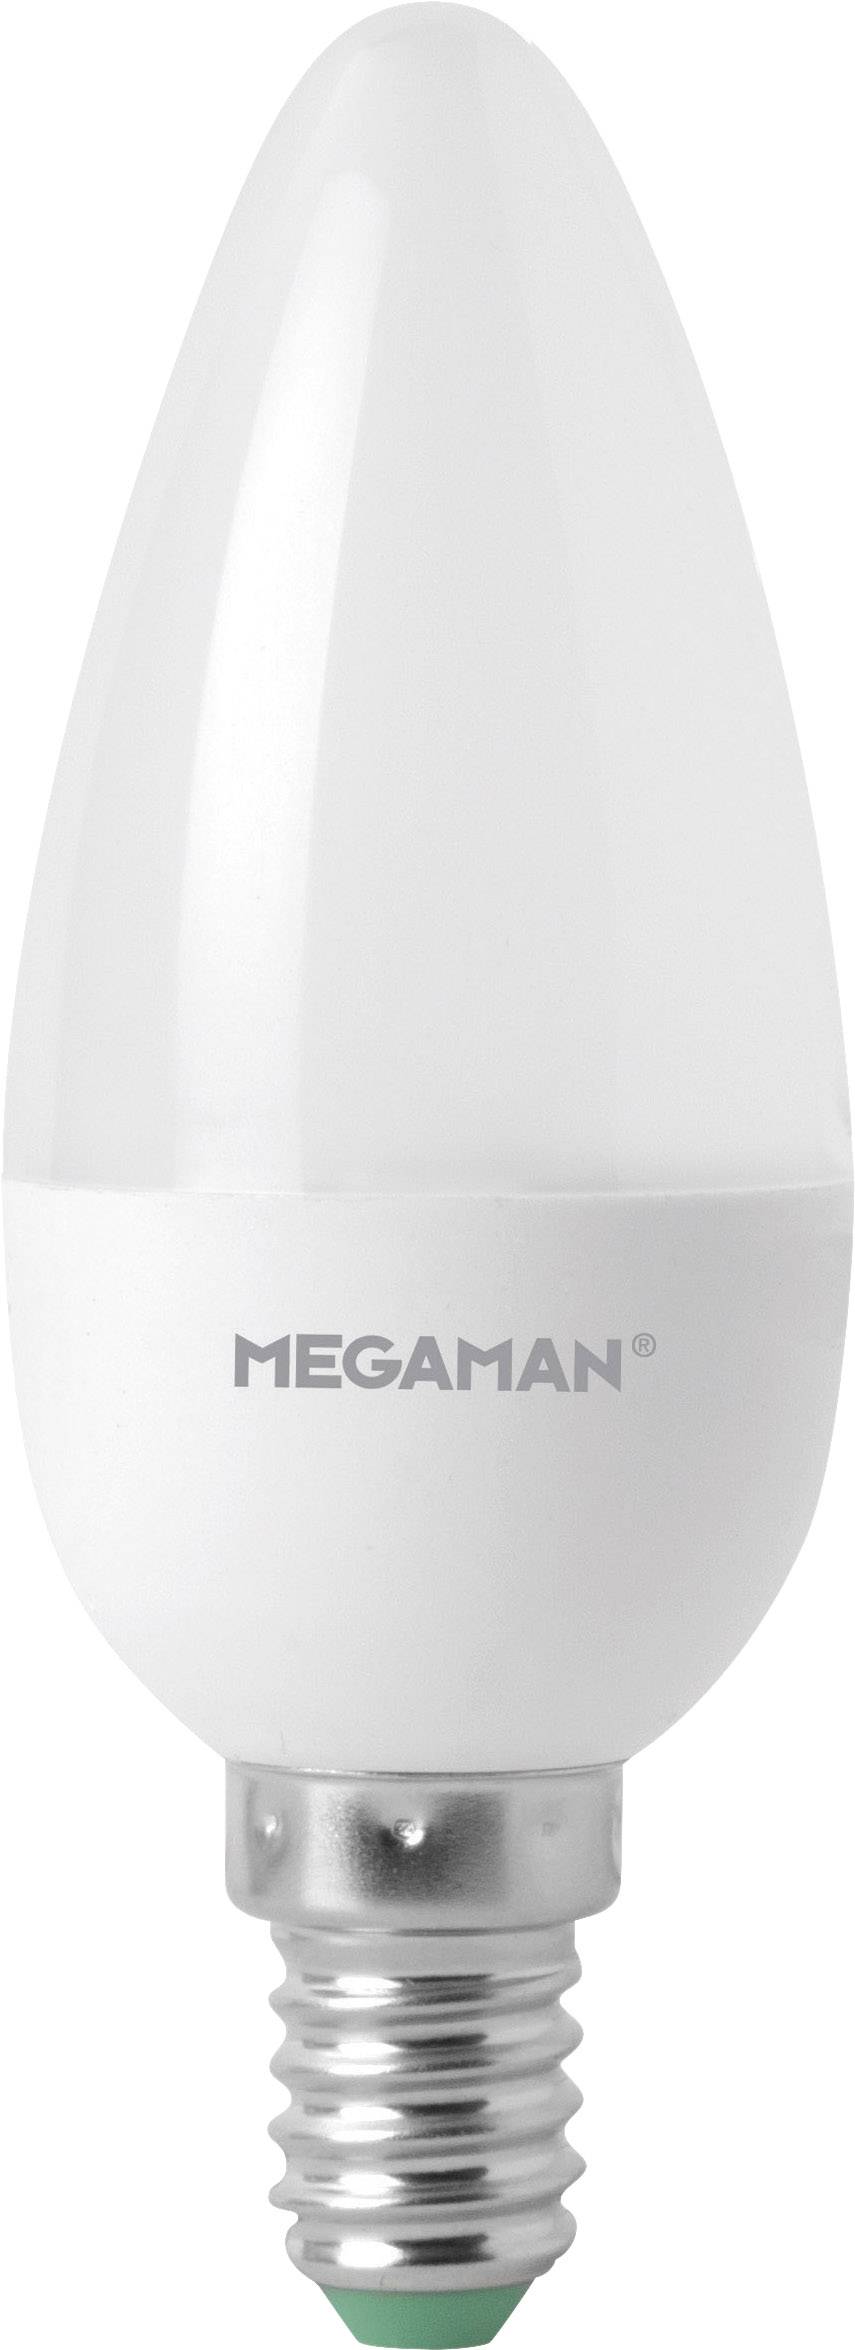 MEGAMAN MEGAM LED-Kerze 3,5-25W/828 E14 MM21122 B35 250lm dimm. 330° A+,4kWh/1000